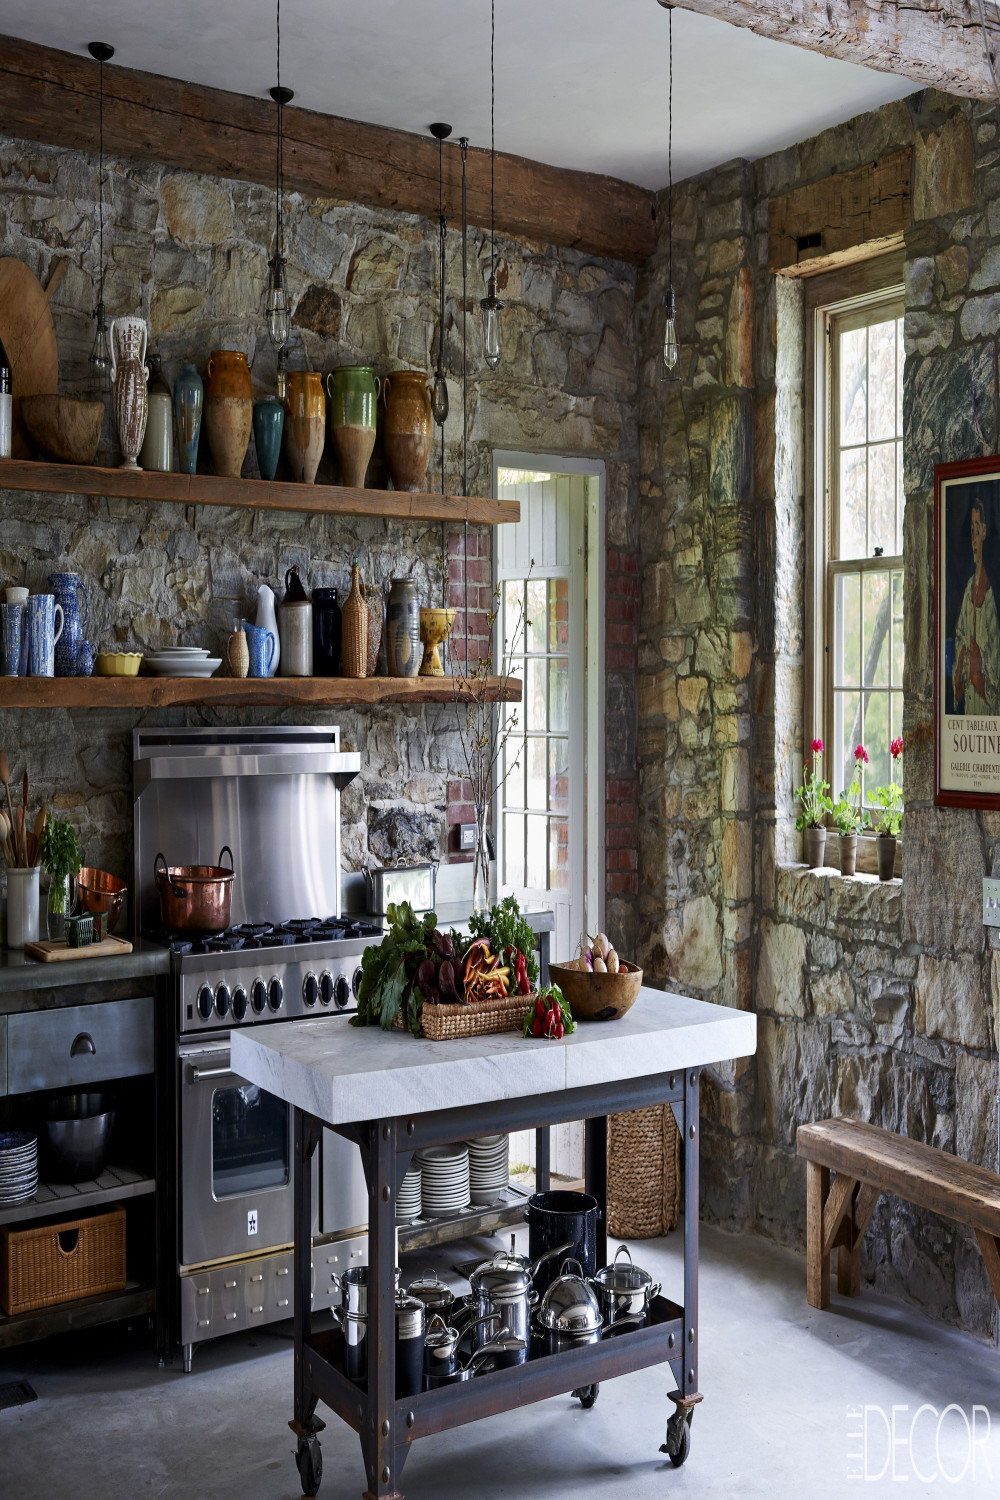 Rustic Kitchen Decor Ideas - Country Kitchens Design